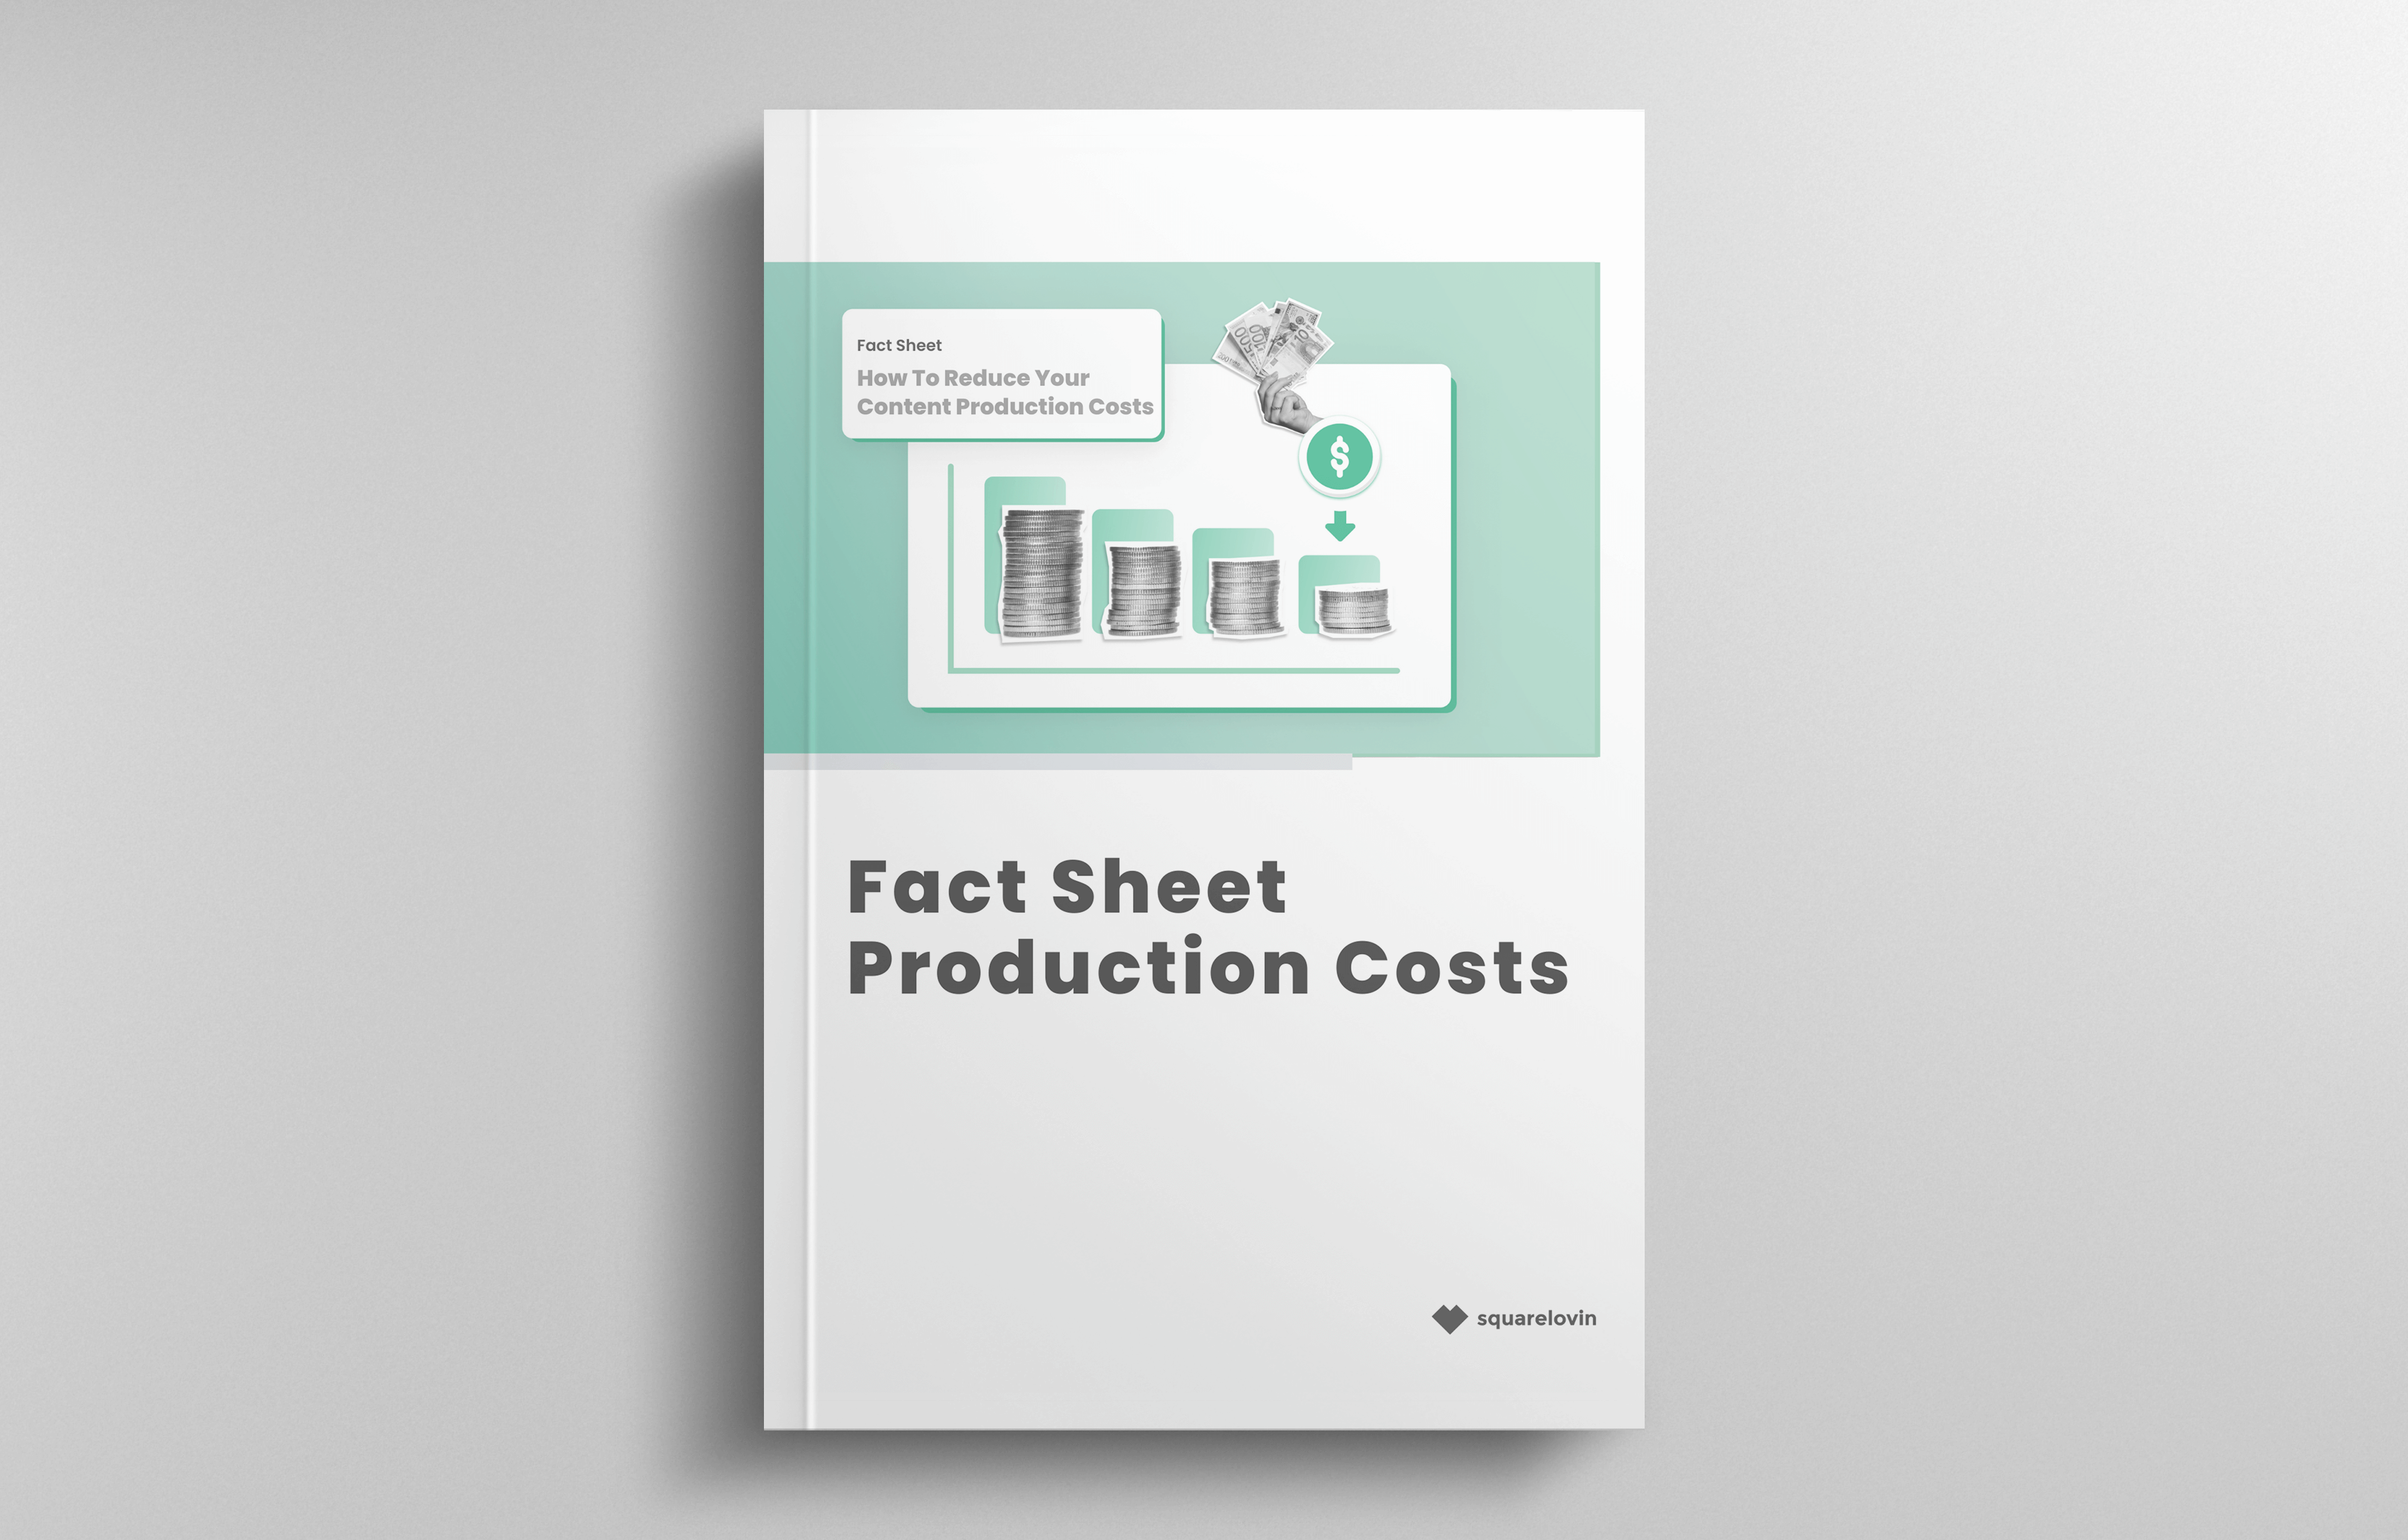 squarelovin_fact sheet_reduce content production costs_header_de